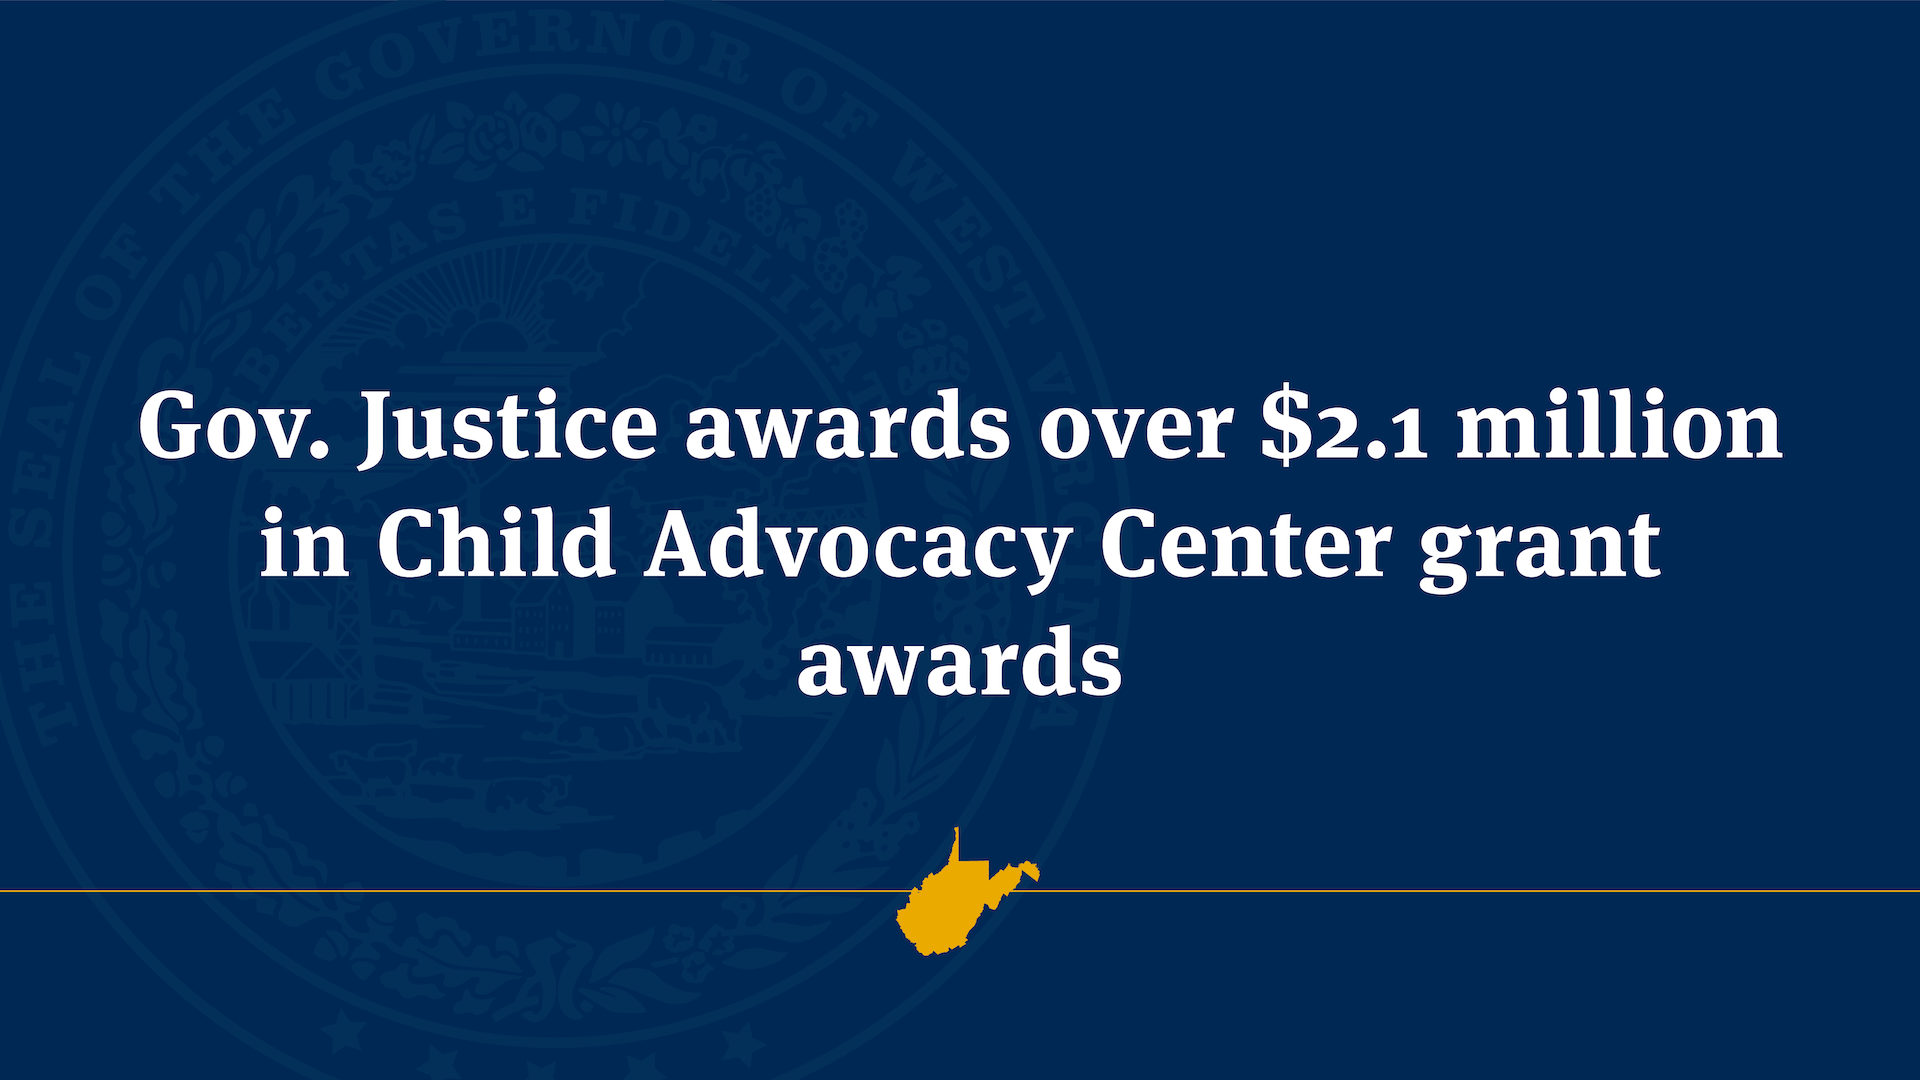 Gov. Justice awards over $2.1 million in Child Advocacy Center Grant awards